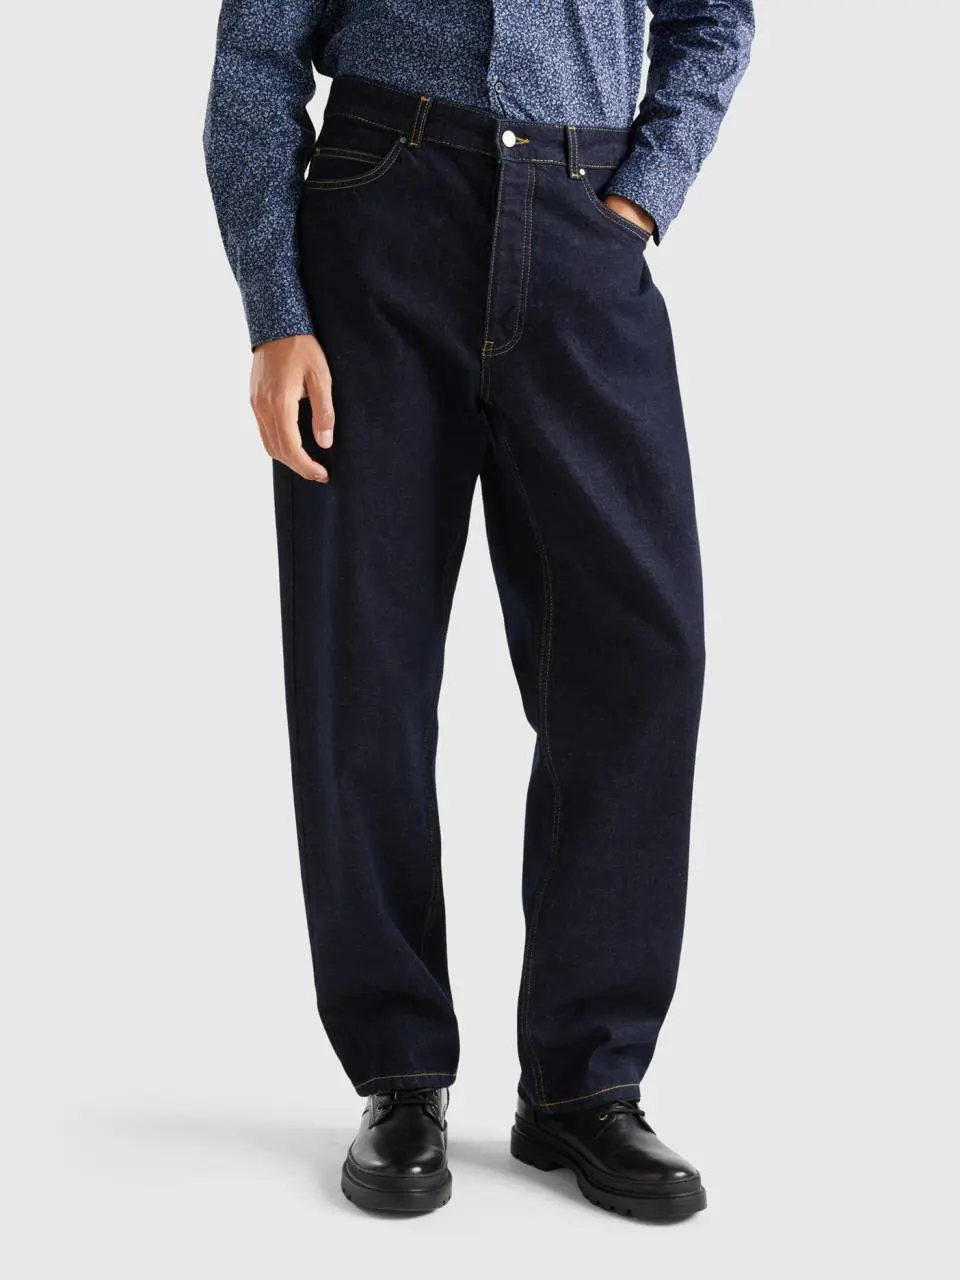 Benetton worker-style jeans. 1